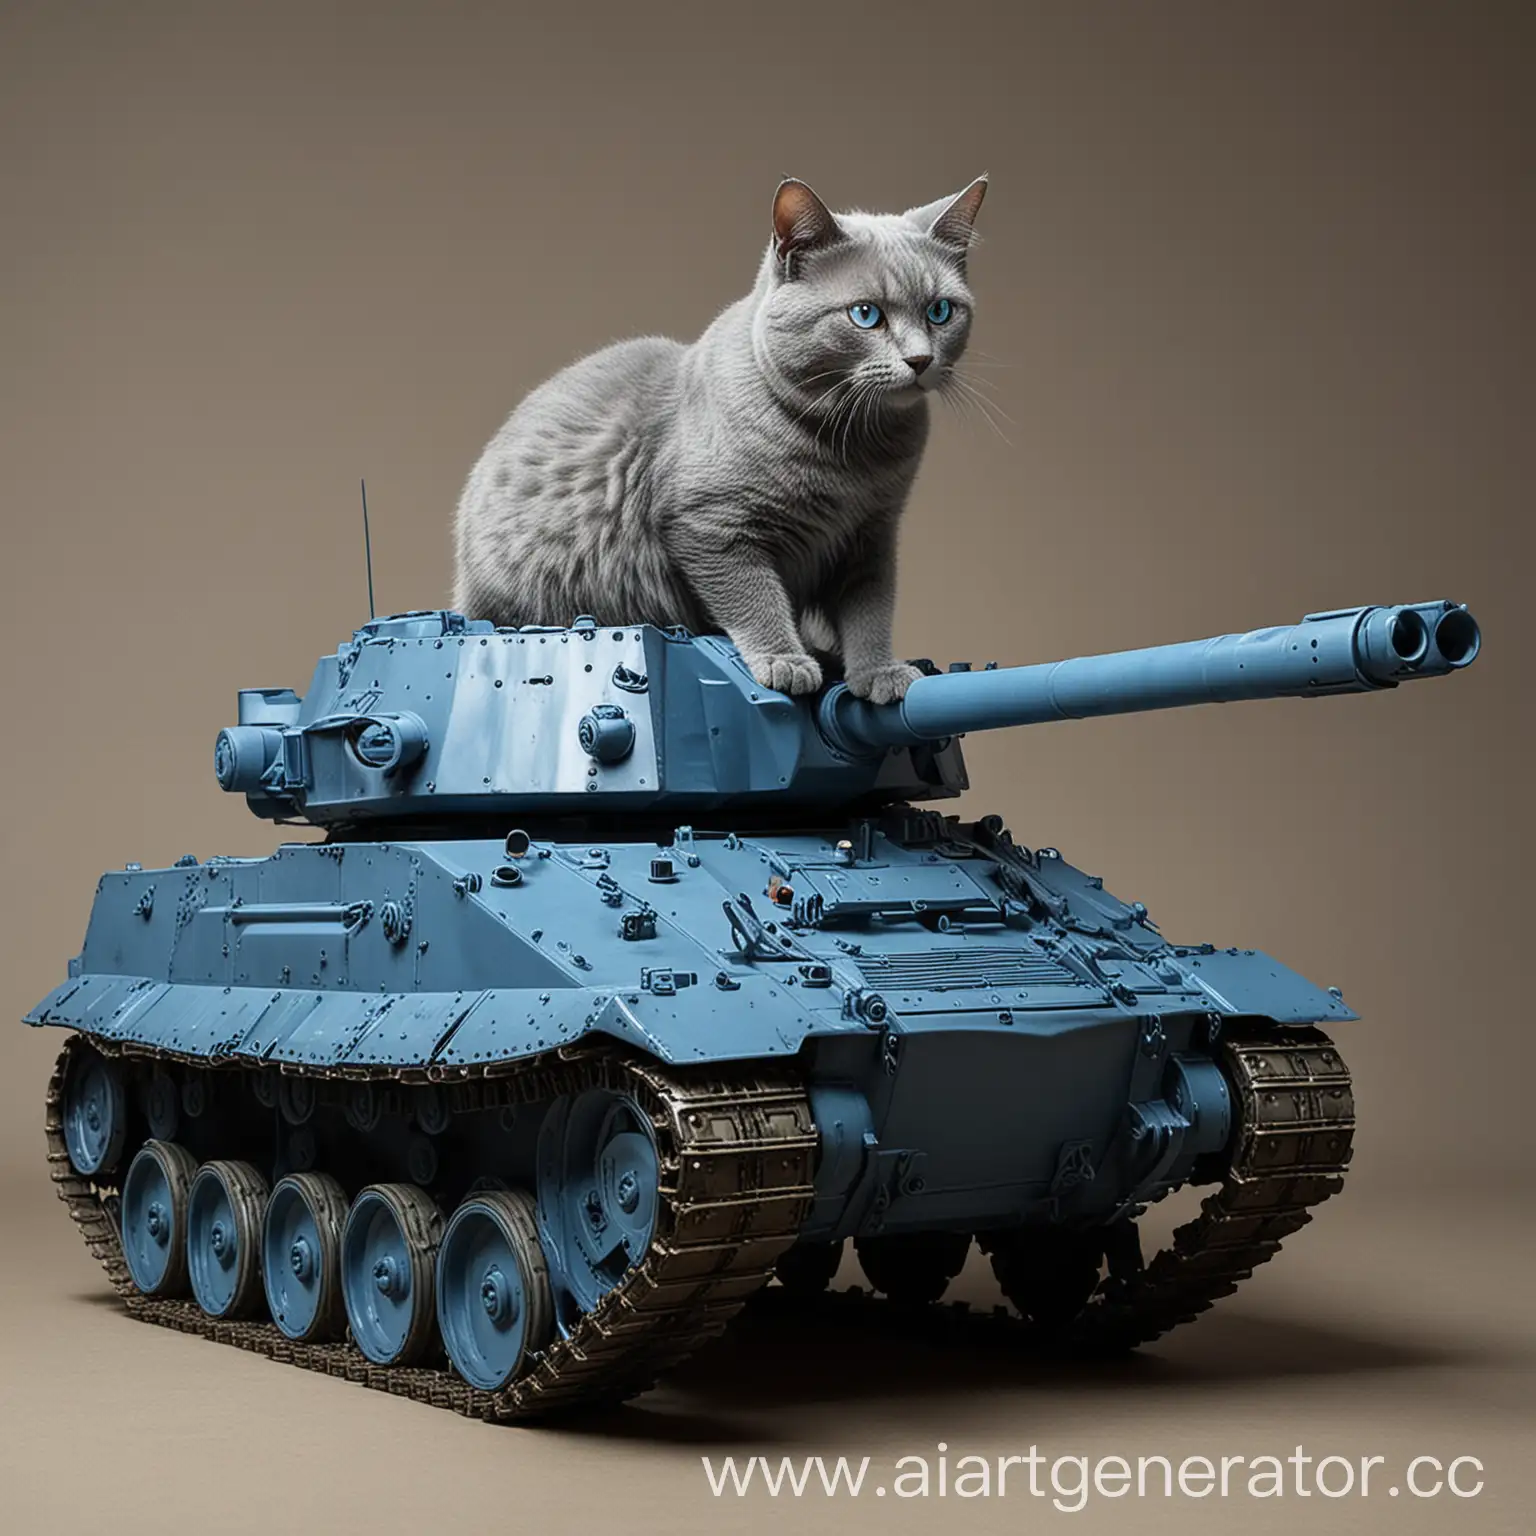 Blue-Cat-Tank-for-1000000-Unique-Luxury-Armored-Vehicle-Featuring-Feline-Design